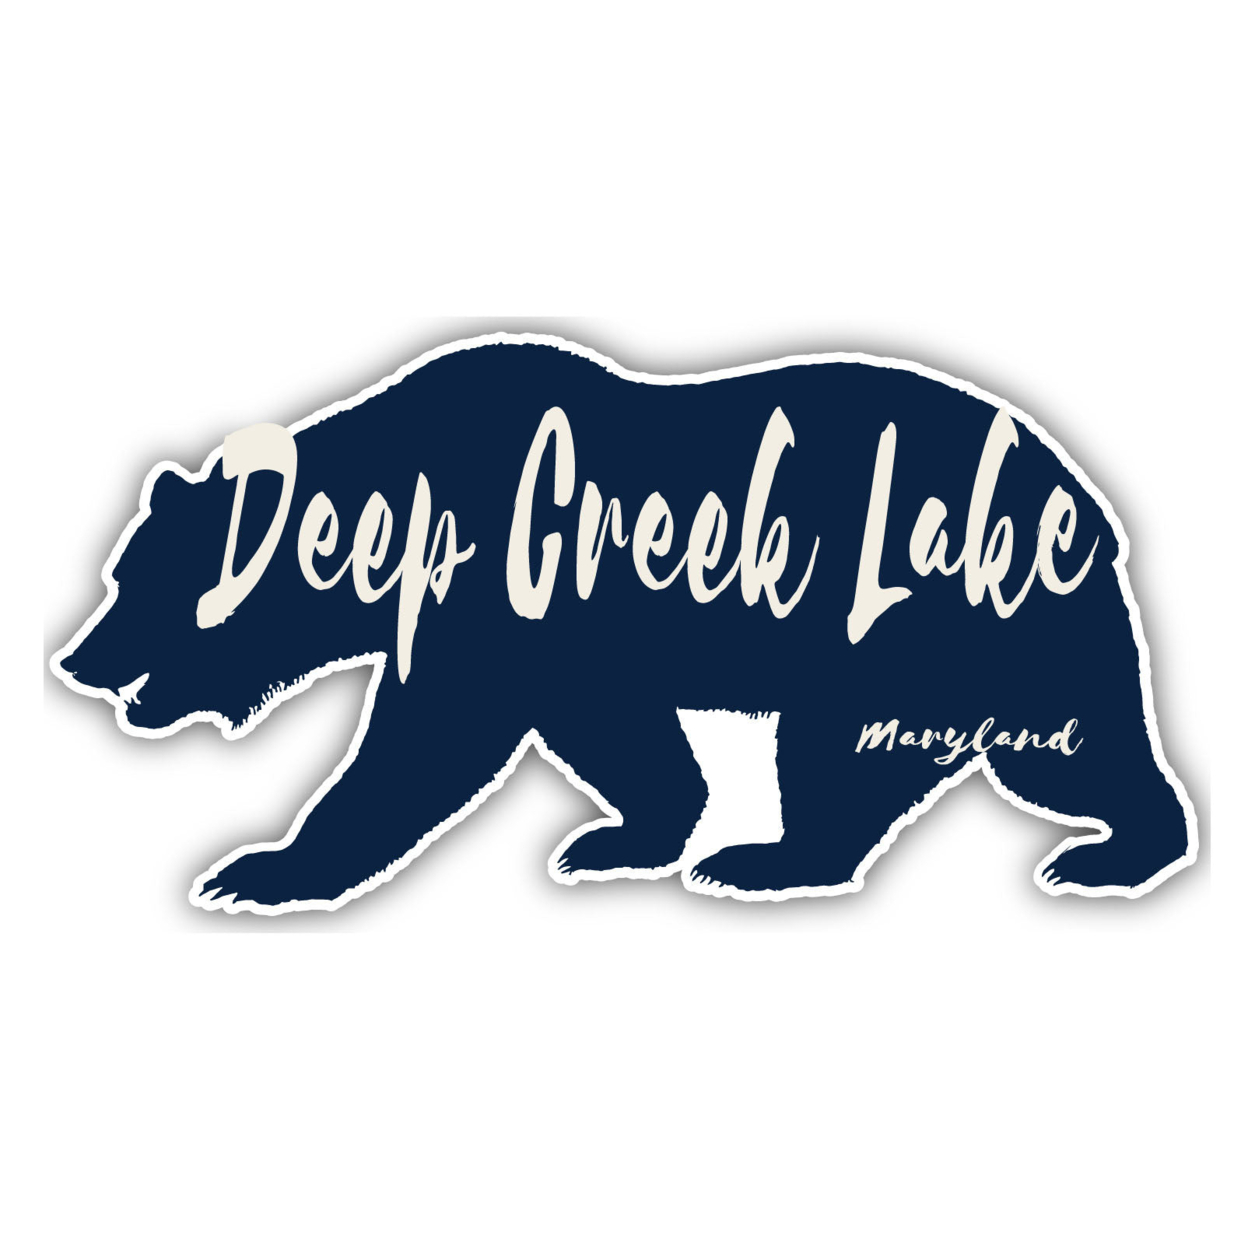 Deep Creek Lake Maryland Souvenir Decorative Stickers (Choose Theme And Size) - Single Unit, 10-Inch, Bear